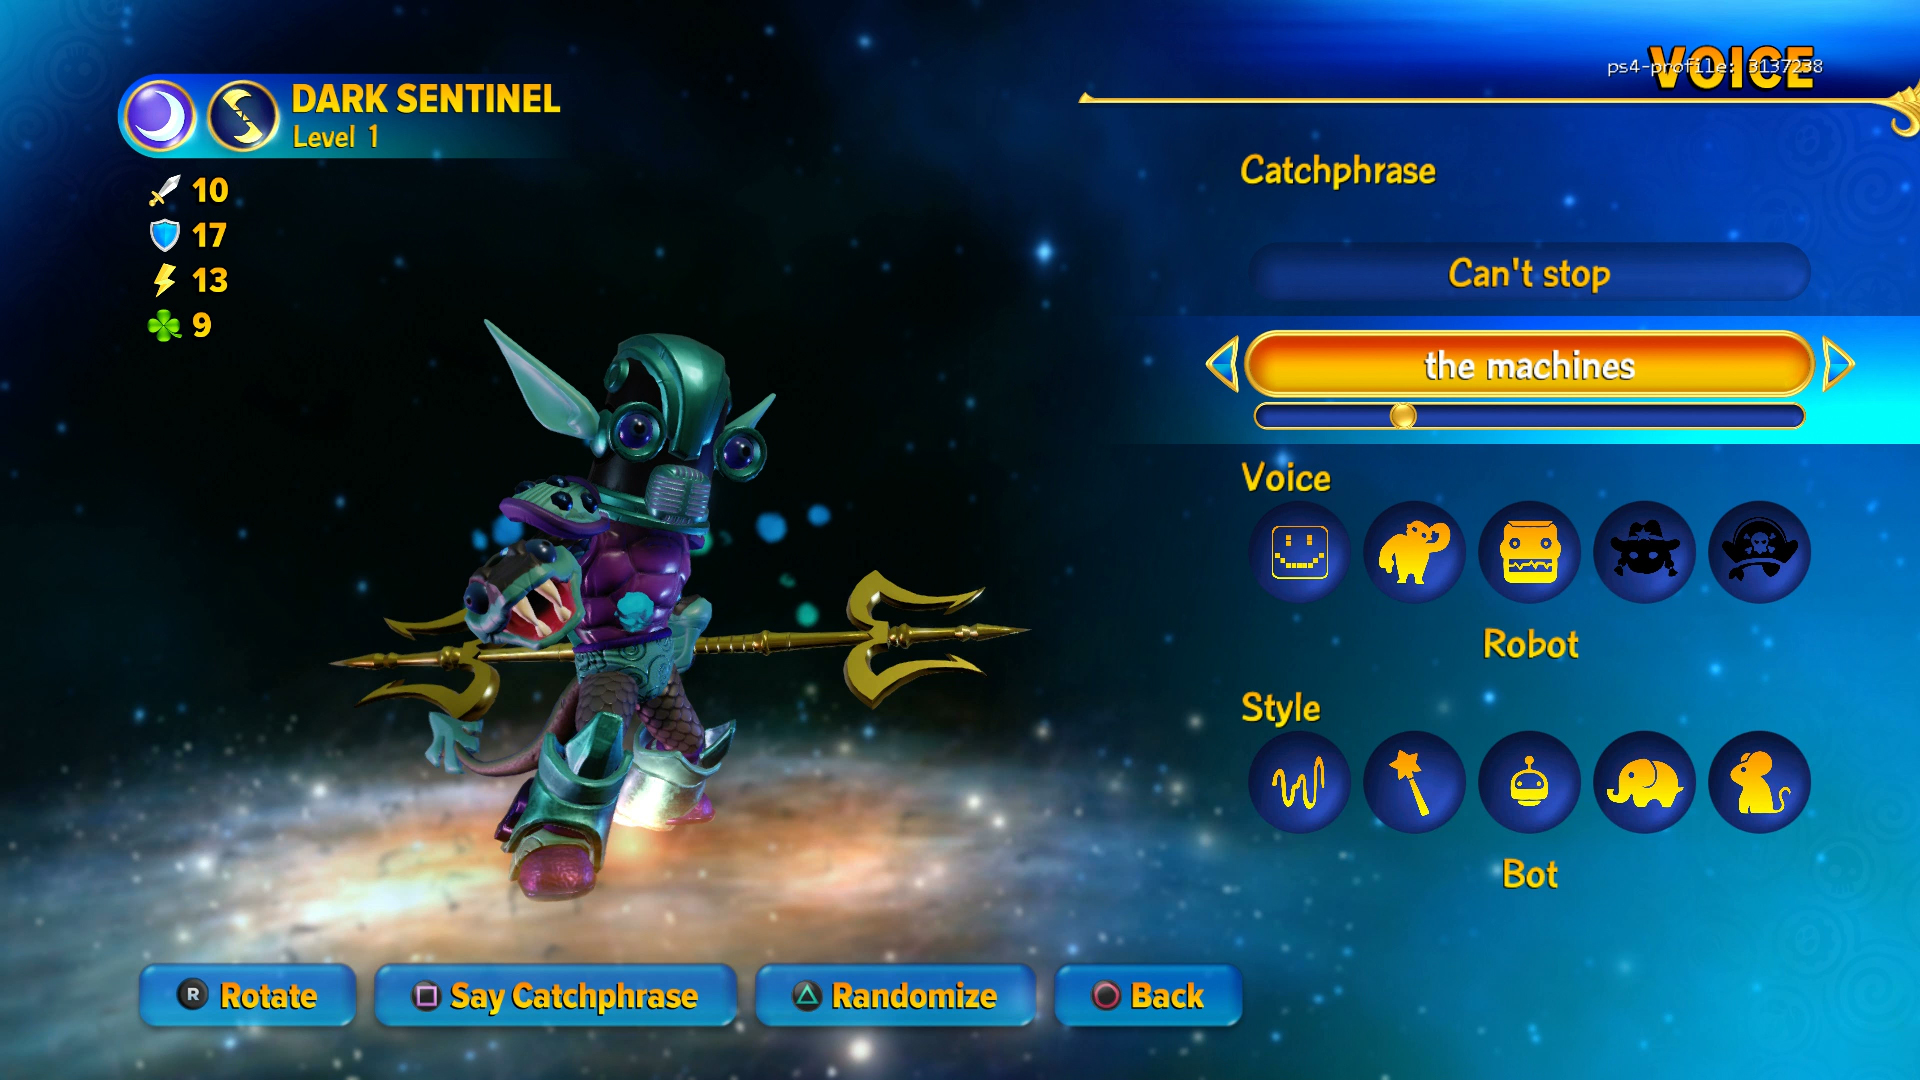 Skylanders Imaginators Dark Sentinel Voice Catchphrase creator custom